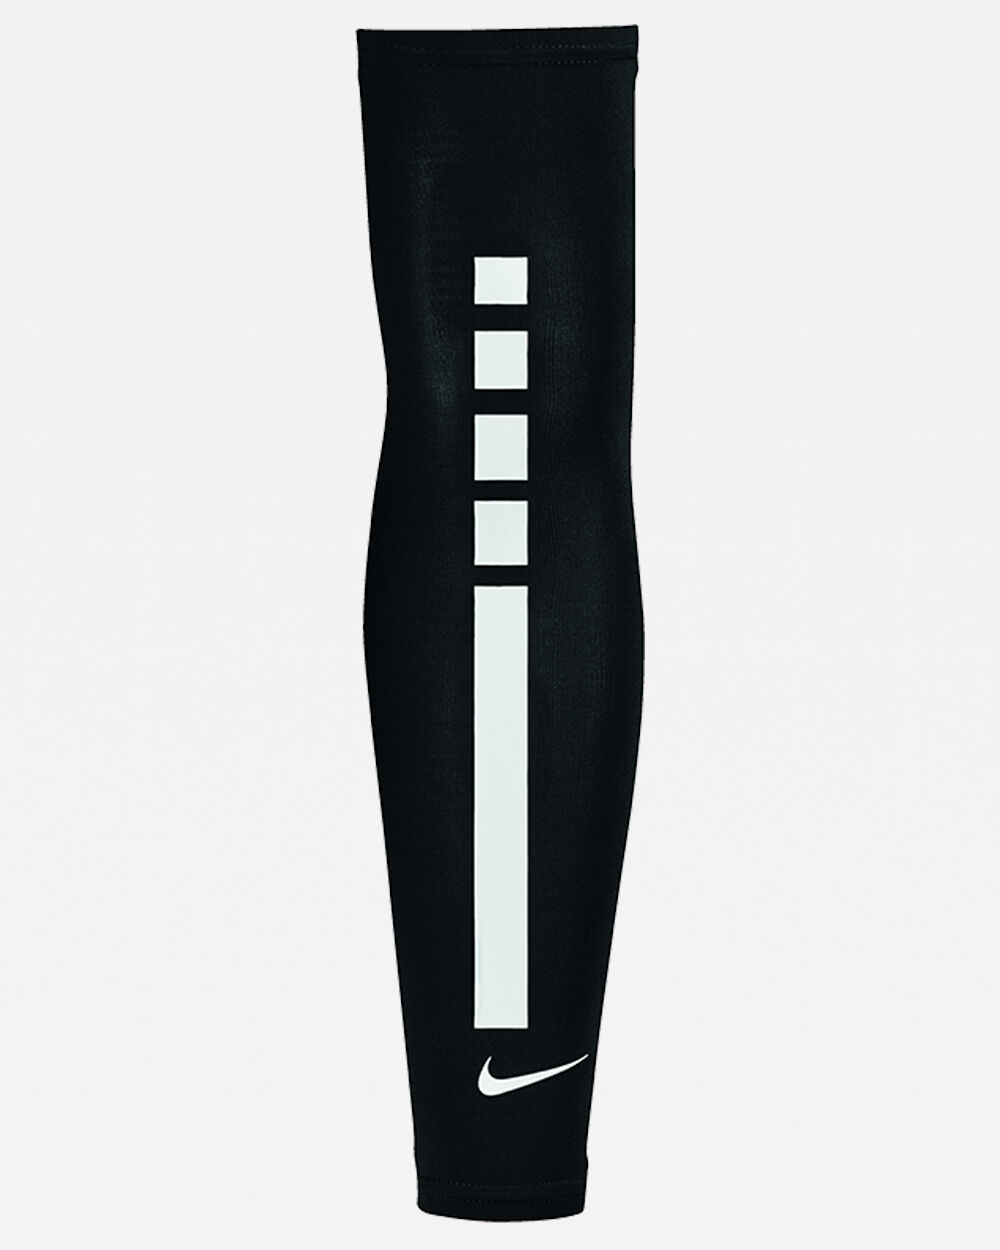 Nike Manicotto Pro Elite 2.0 Bianco e Nero Unisex AC4183-027 L/XL